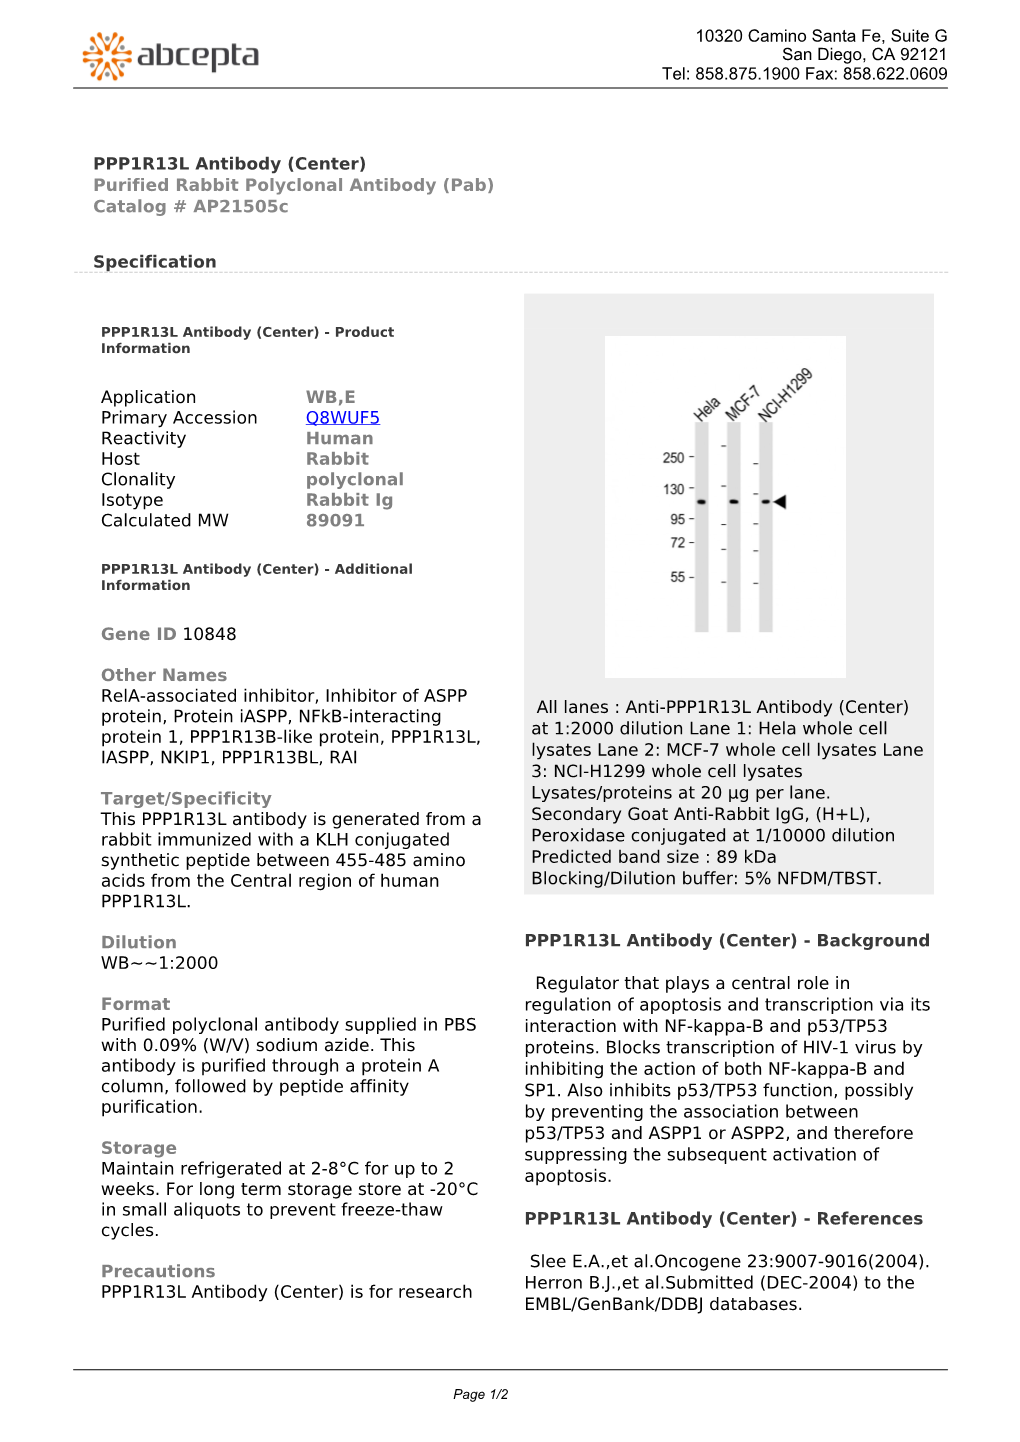 PPP1R13L Antibody (Center) Purified Rabbit Polyclonal Antibody (Pab) Catalog # Ap21505c